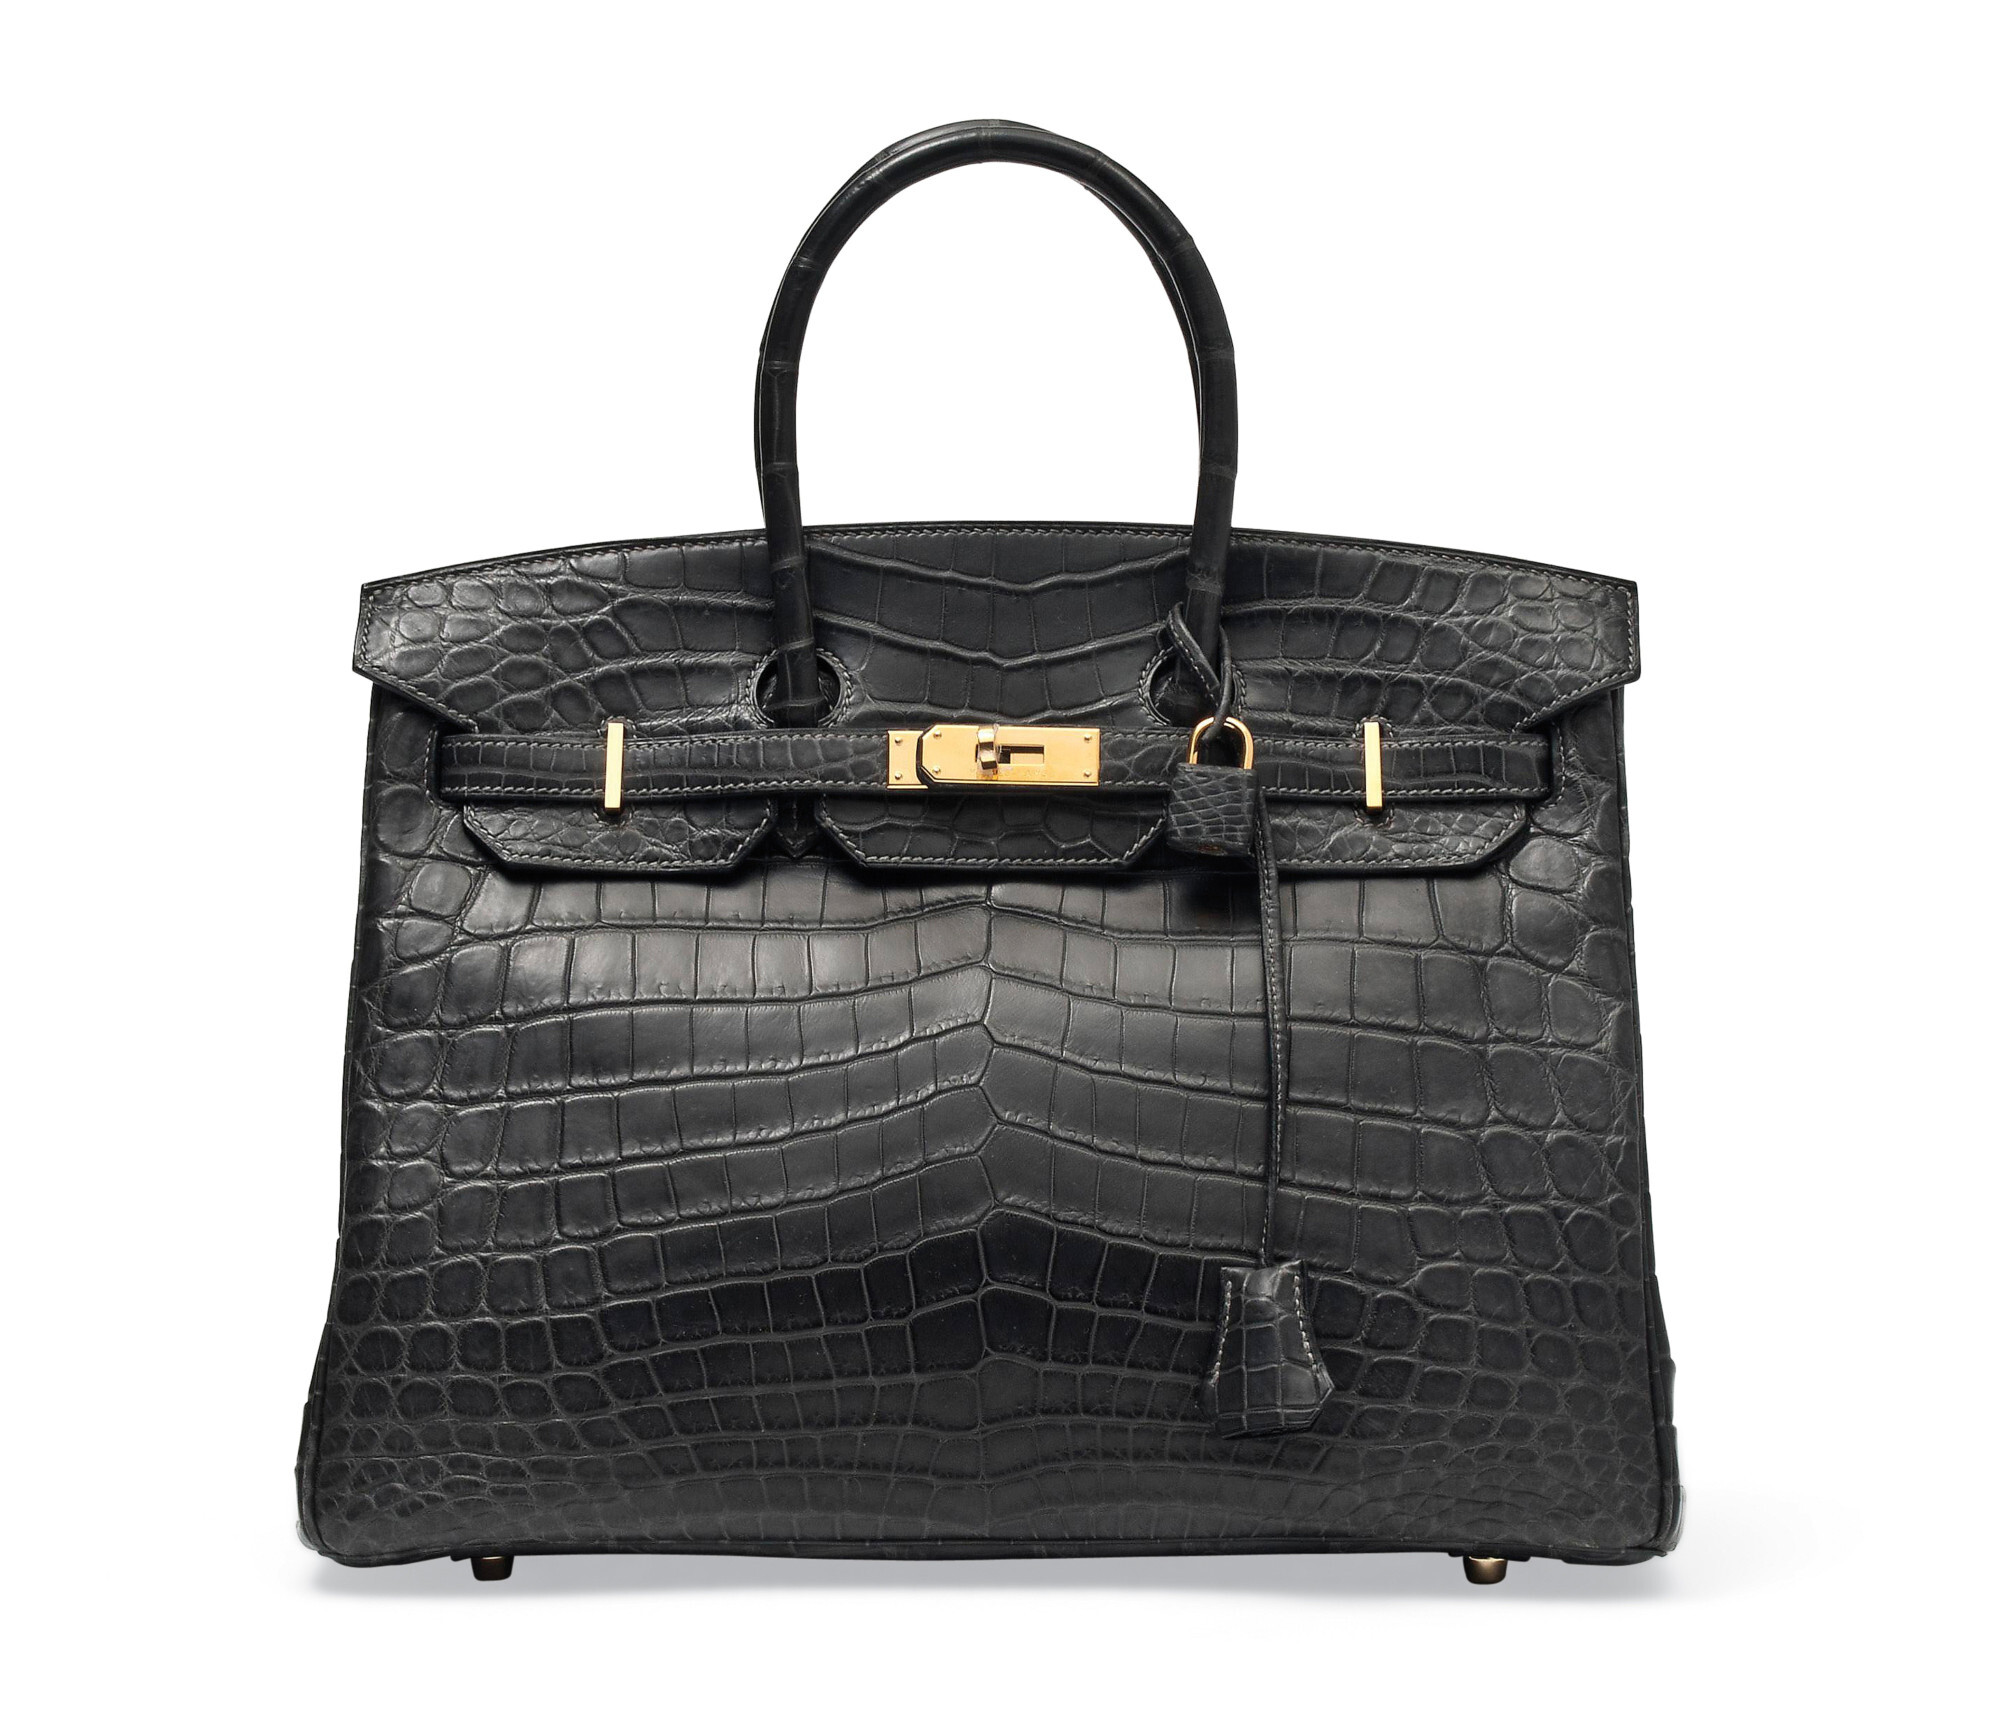 Jane Birkin puts her personalised Hermès Birkin handbag up for